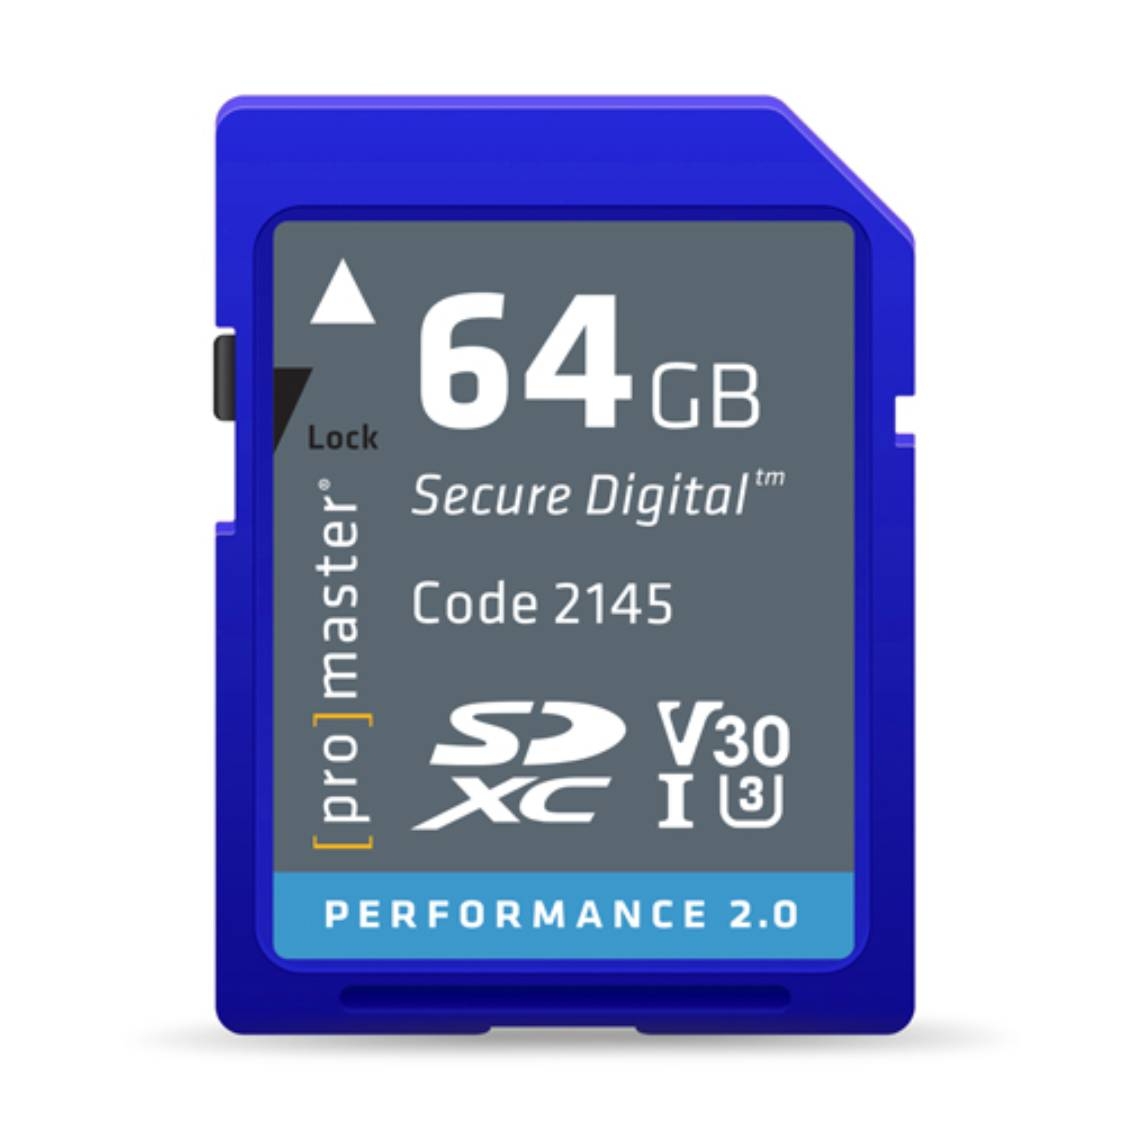 Promaster 64GB SDHC Performance 2.0 Memory Card